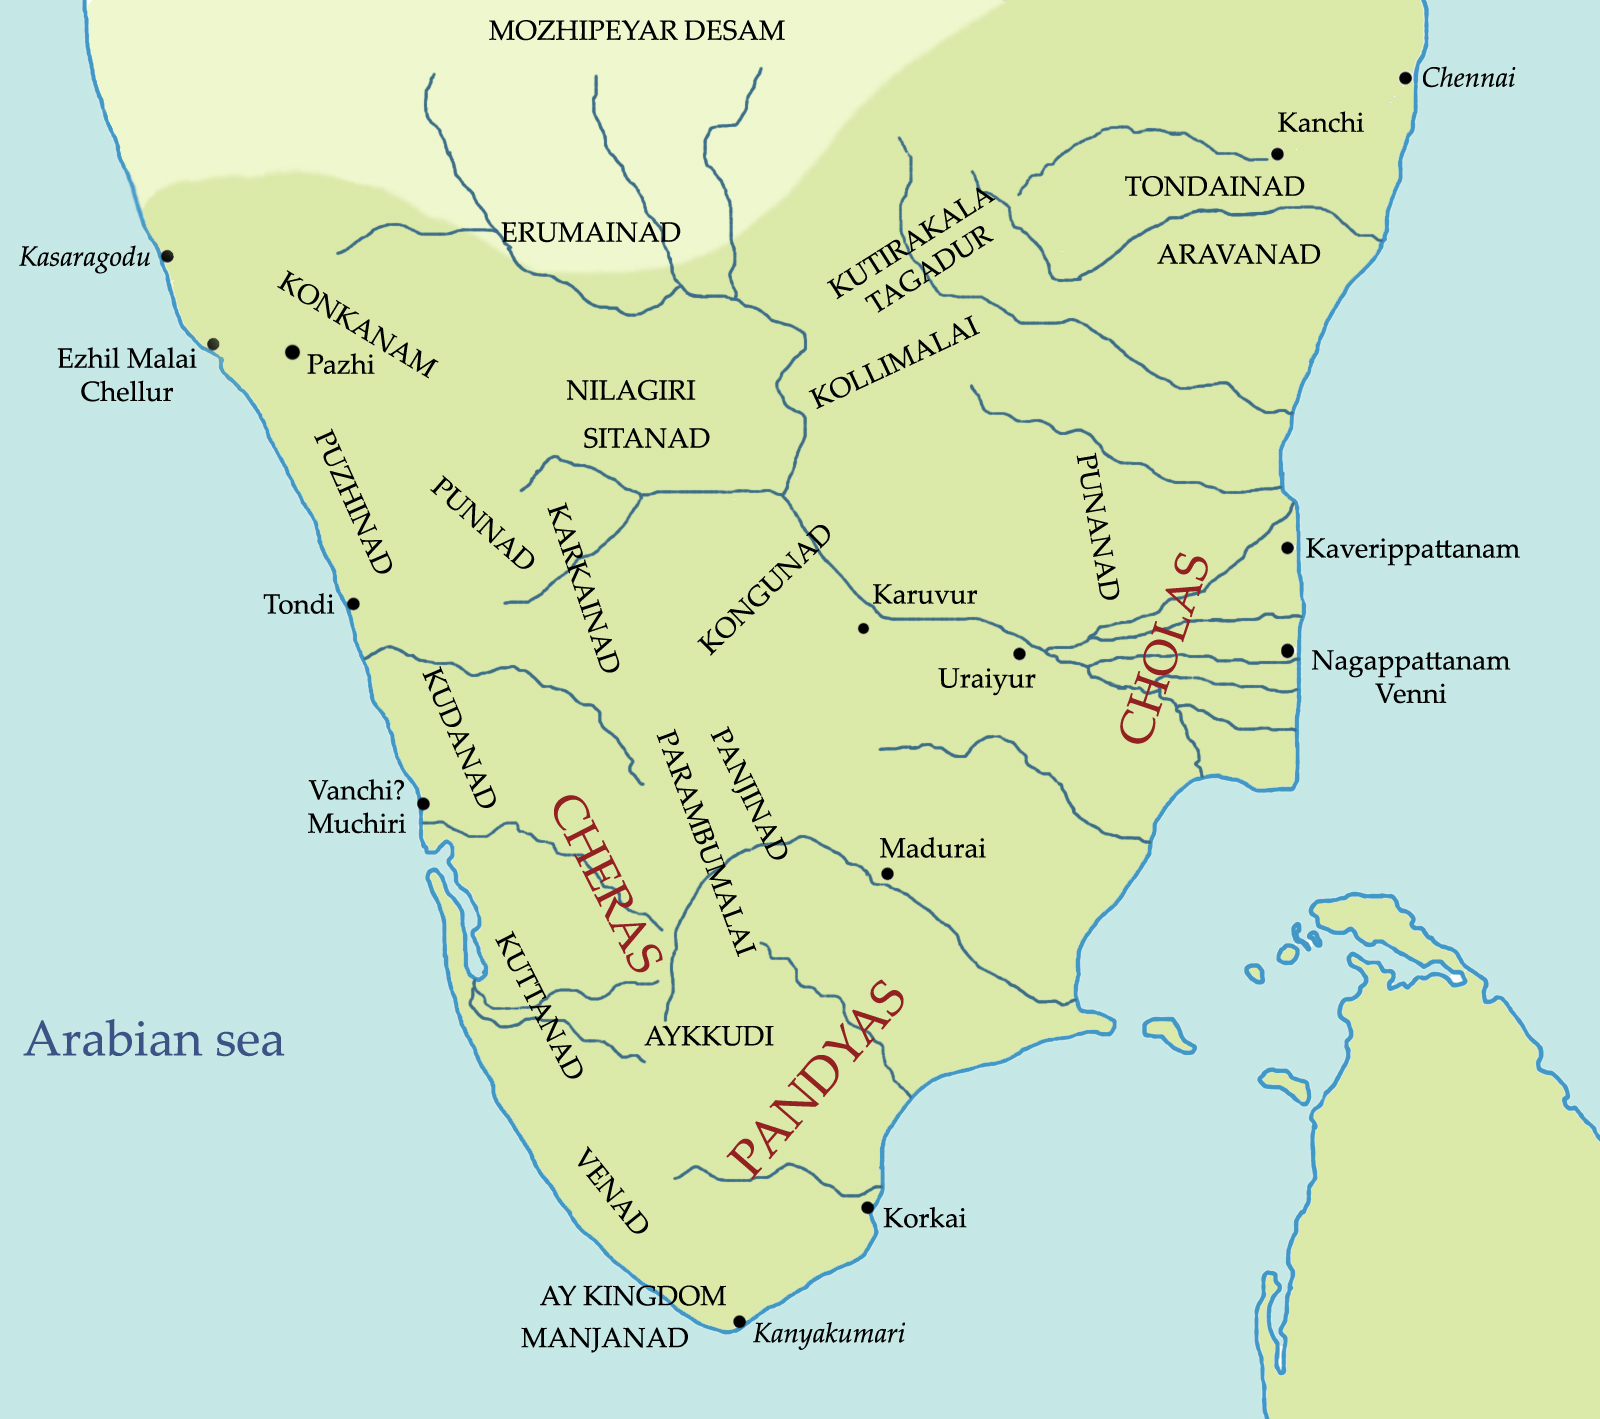 Sangam-era Tamilakam